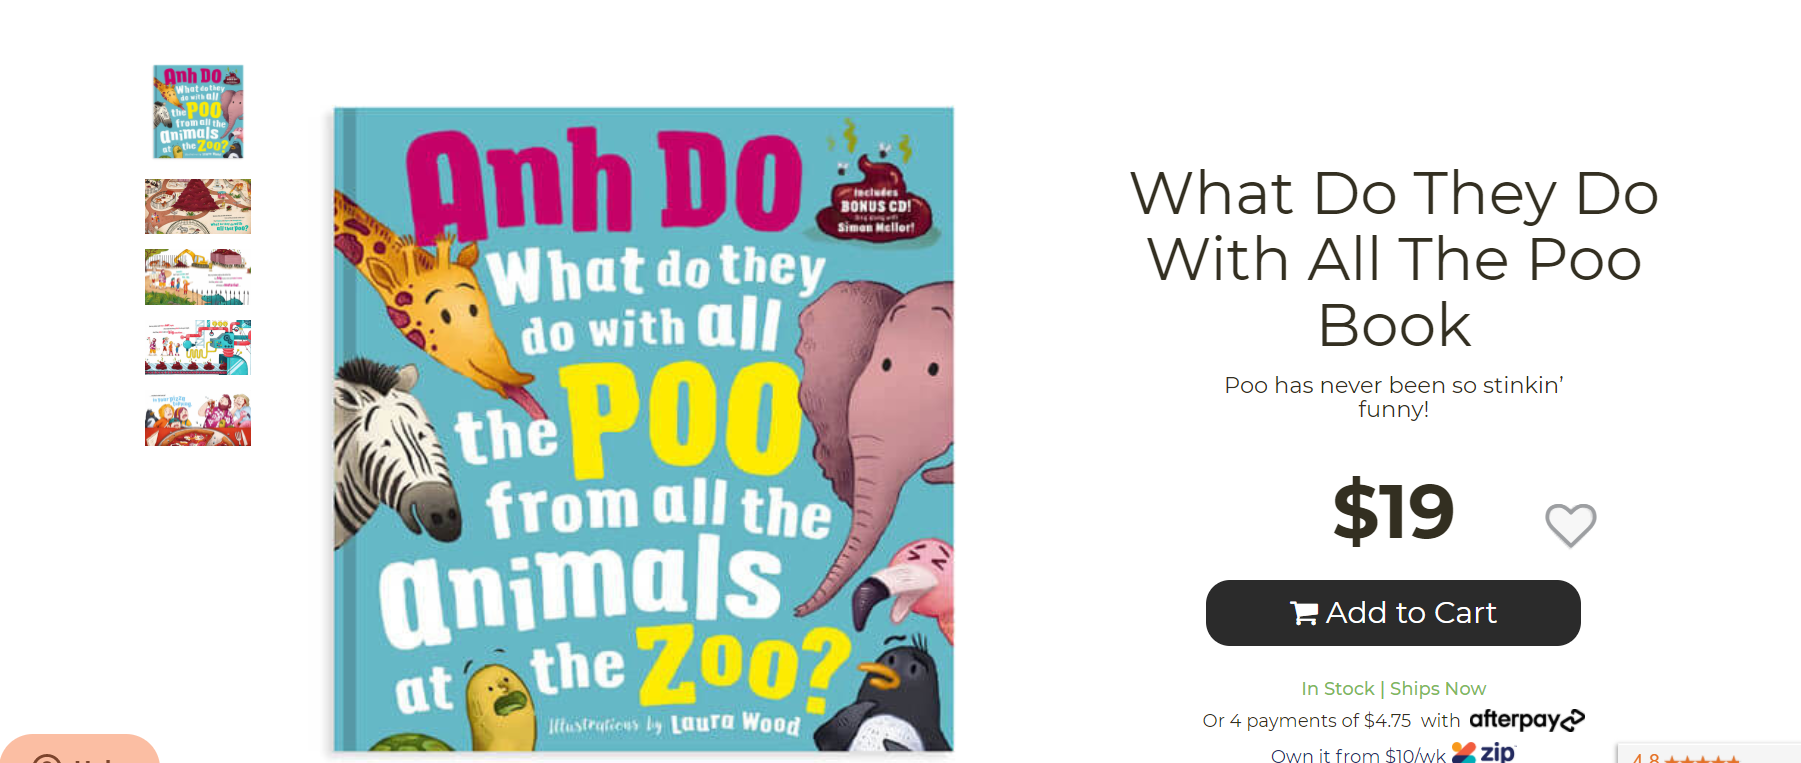 Anh Do - Poo book